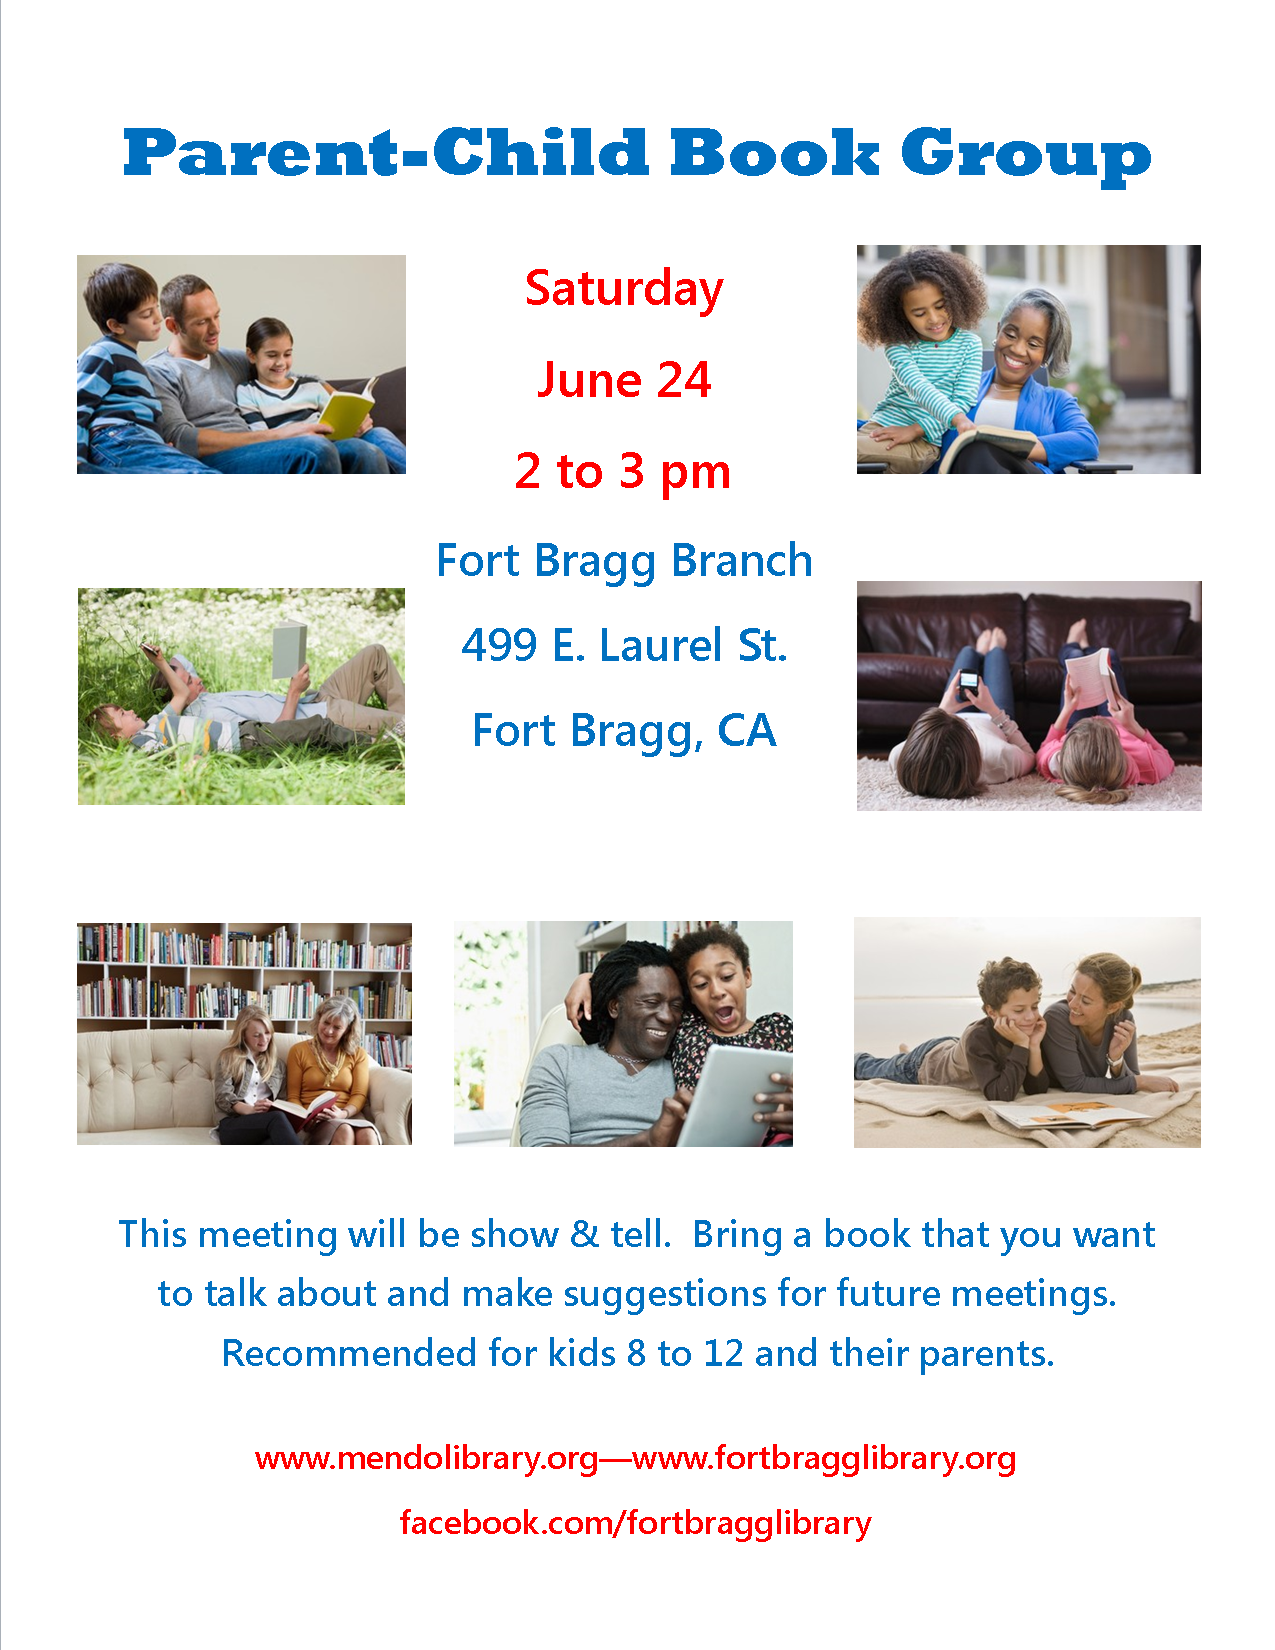 Parent Child Book Group June 2017